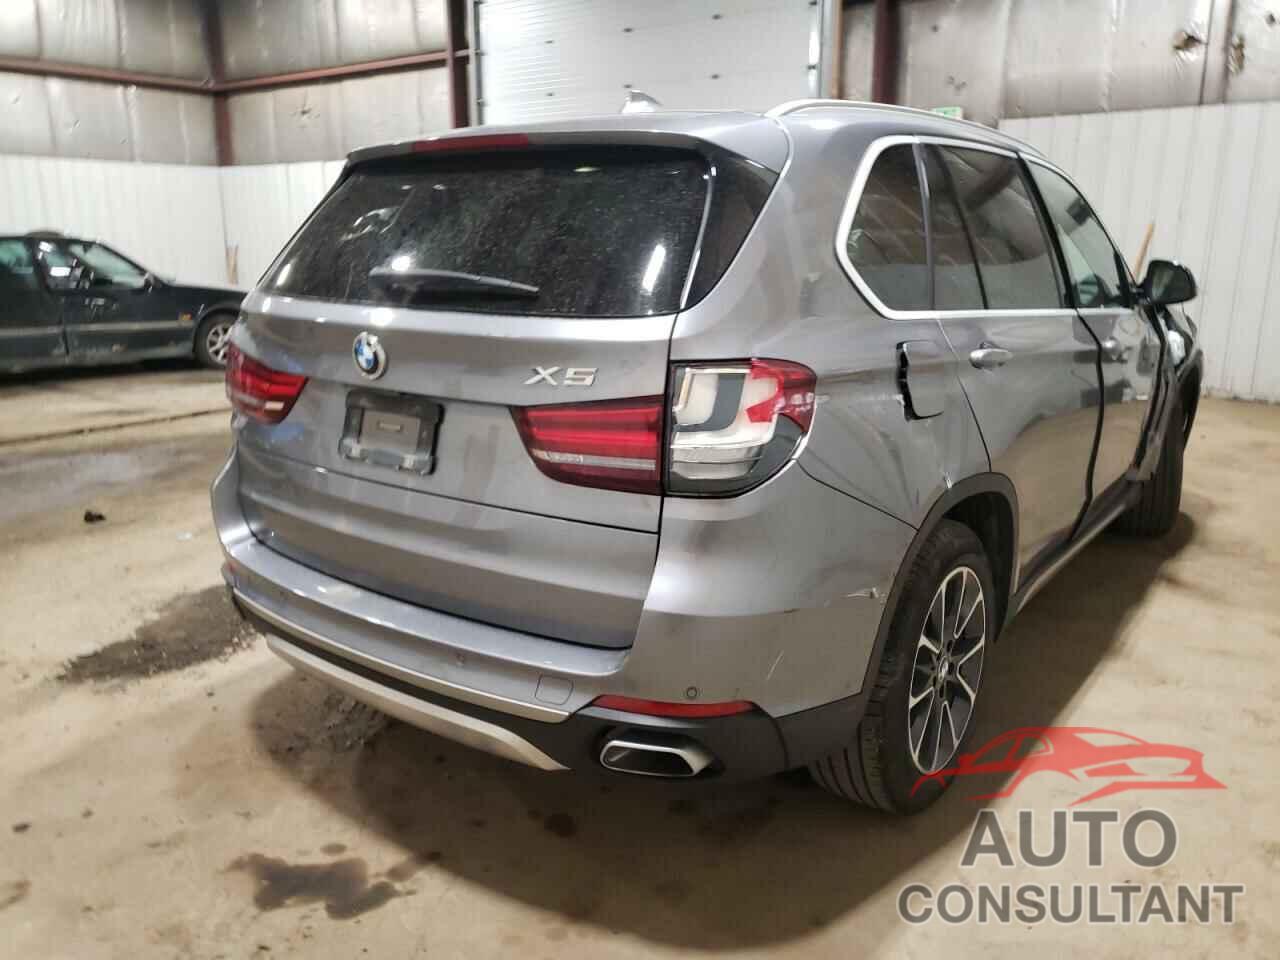 BMW X5 2018 - 5UXKR0C58J0Y02432